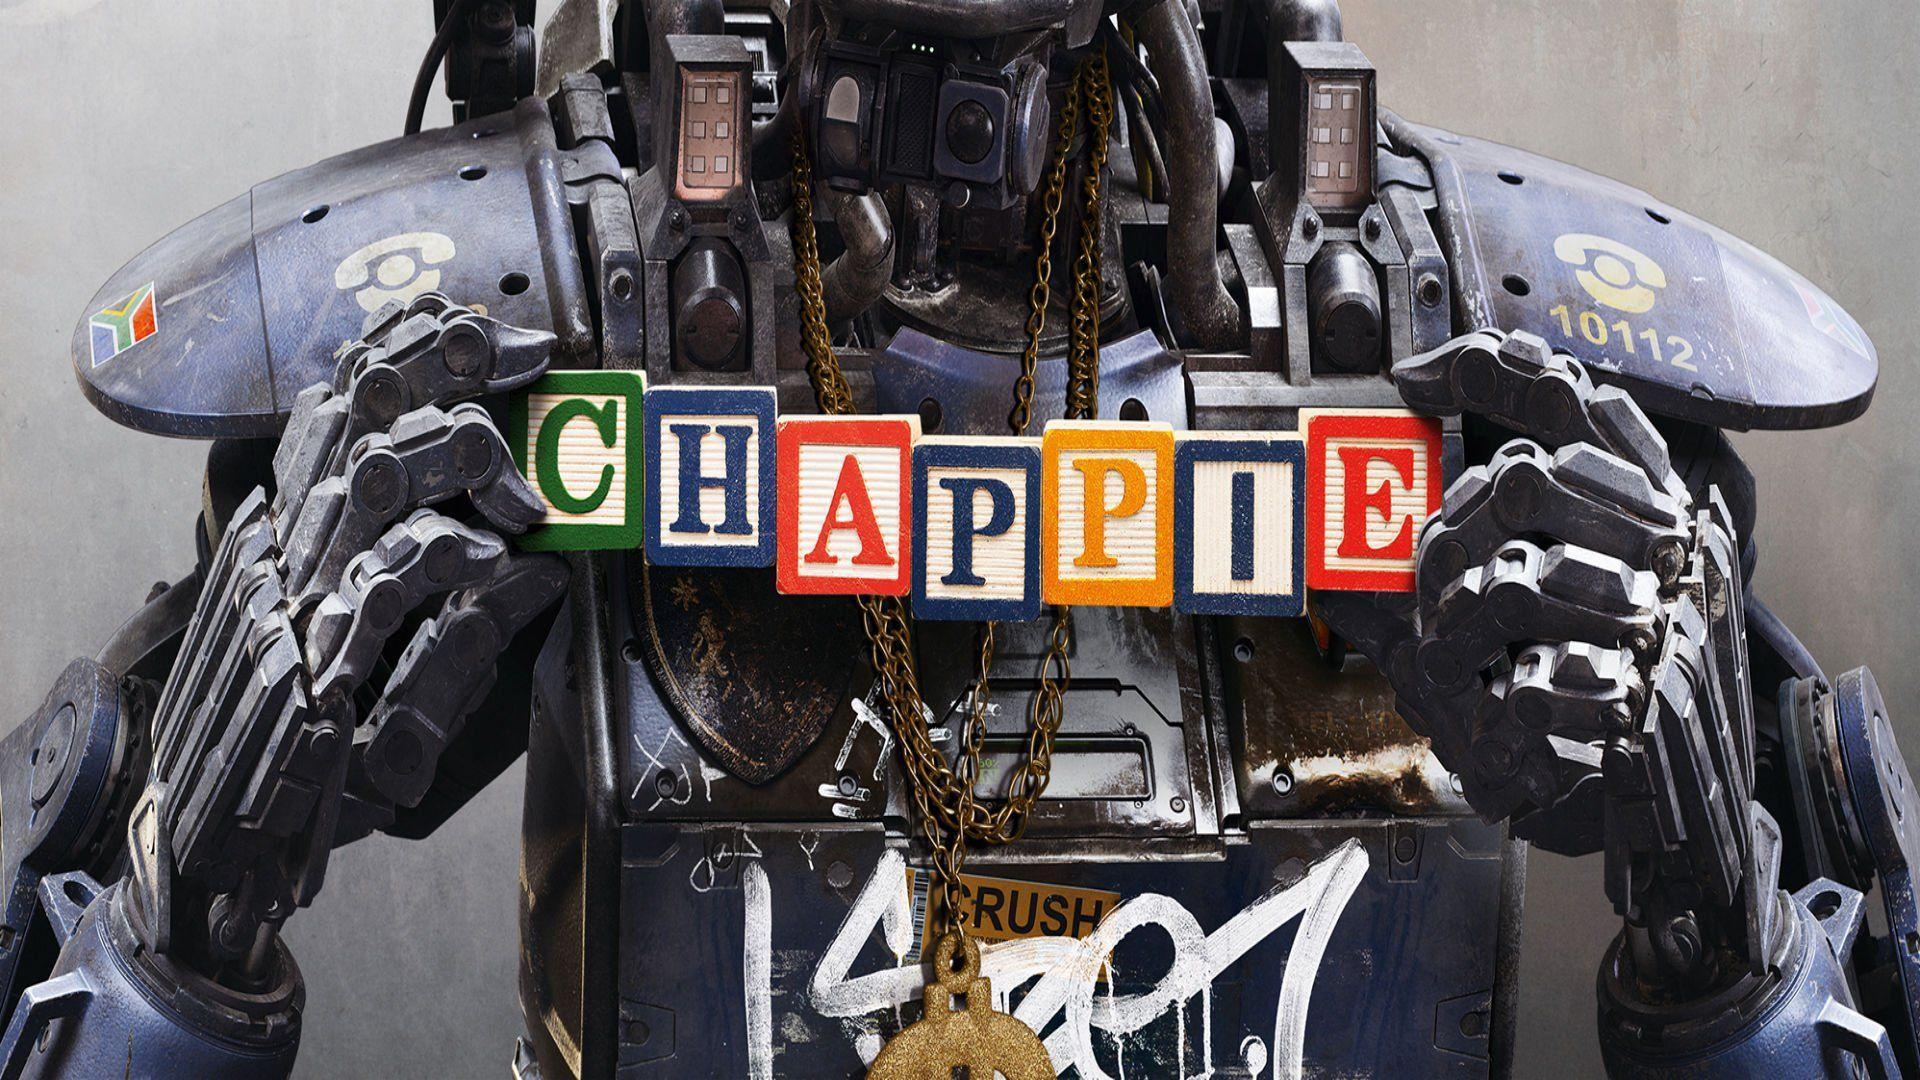 CHAPPIE Sci Fi Futuristic Action Thriller Robot Technics Science